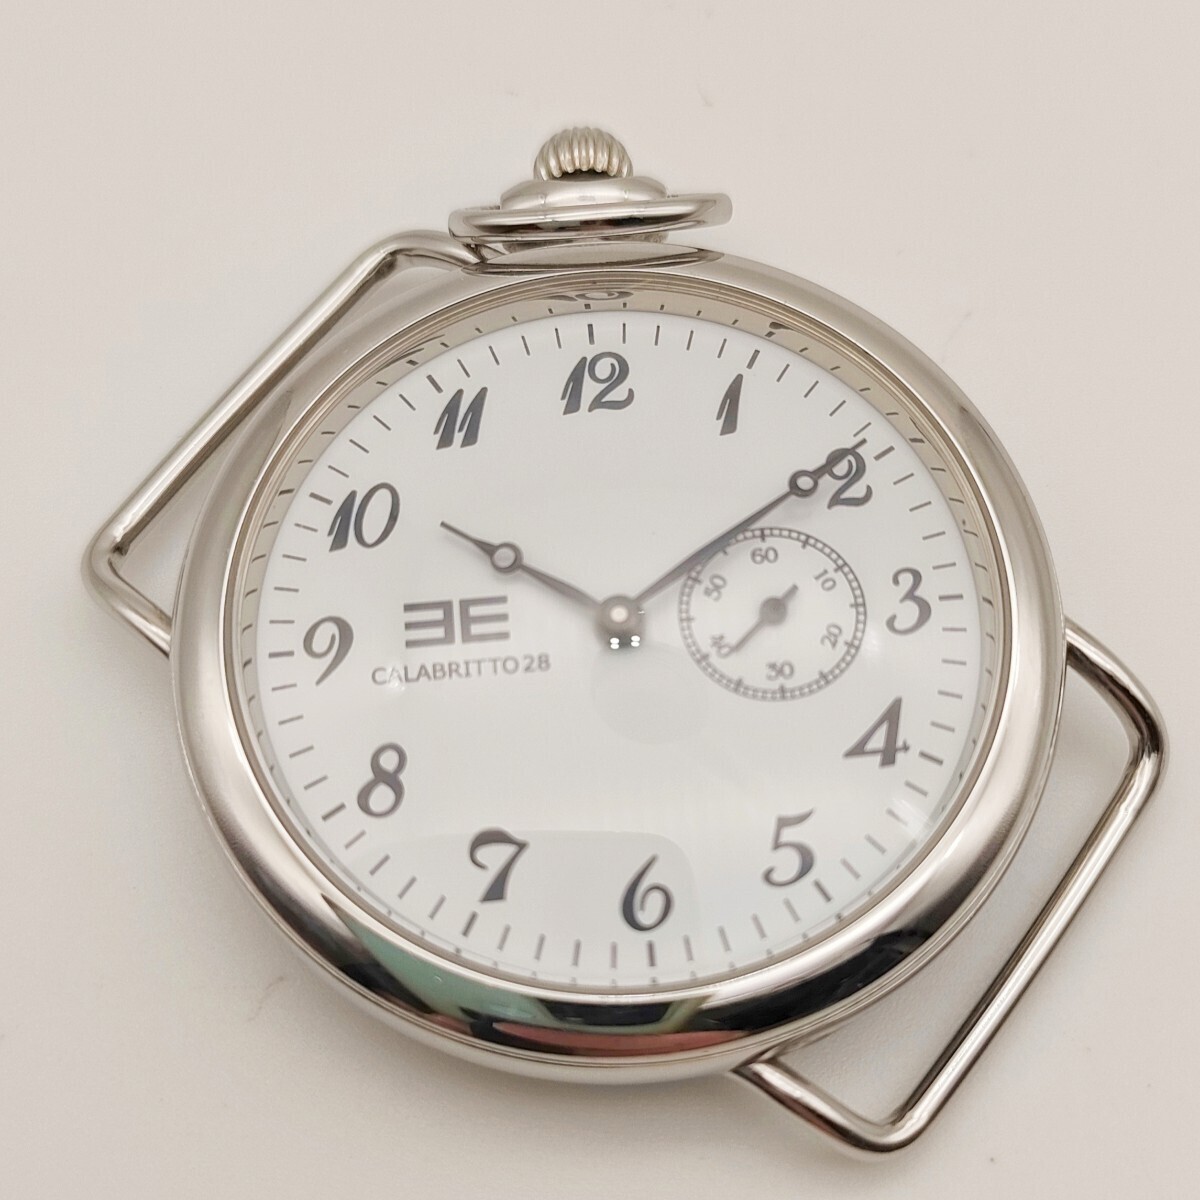 1 jpy operation goods CALABRITTO pocket watch wristwatch white face cloth belt analogue quartz 